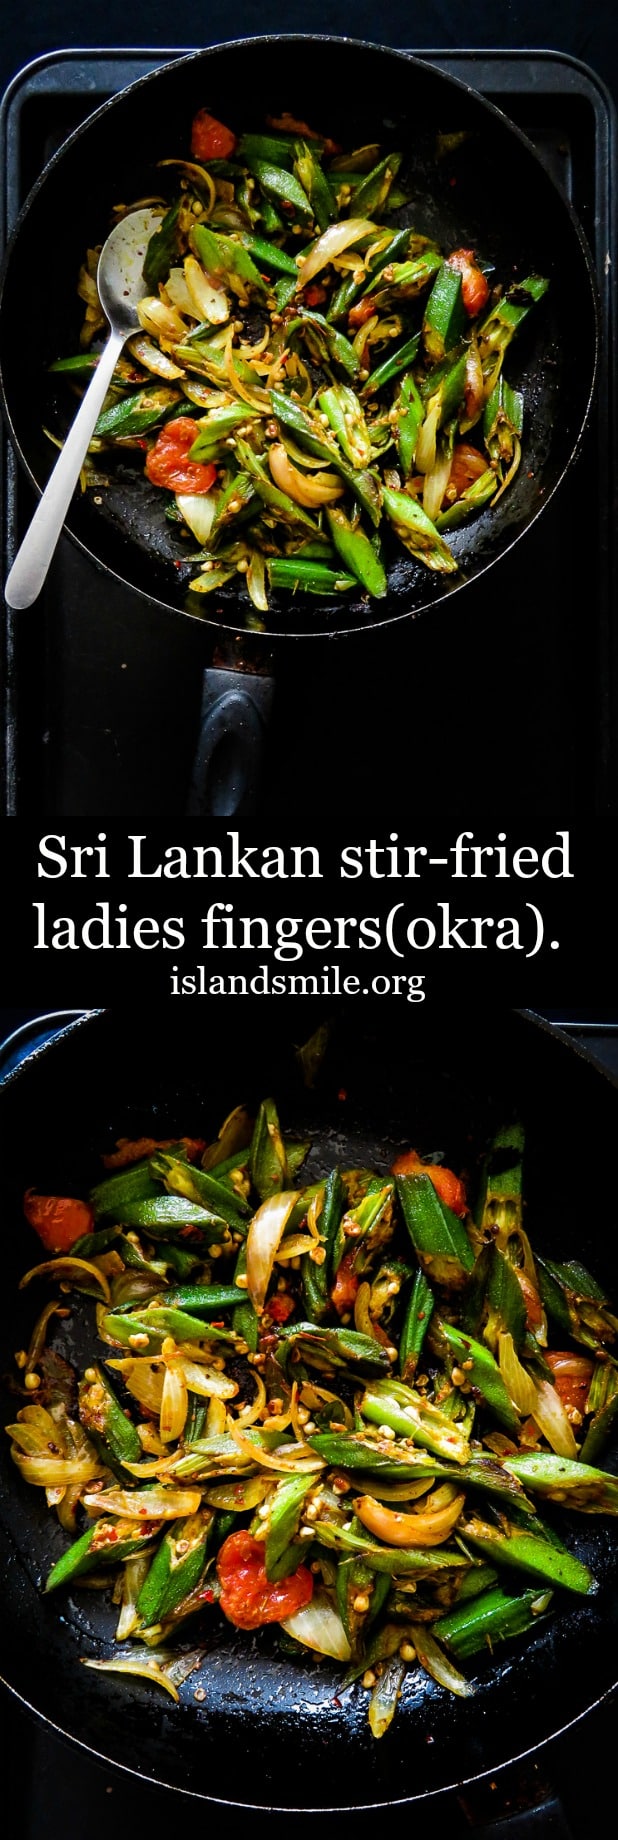 okra stir-fry made the Sri Lankan way. Try it, you might be surprised how good it tastes. #okra #vegetarian #vegan #glutenfree #lowcarb #stirfry #srilankan #sidedish